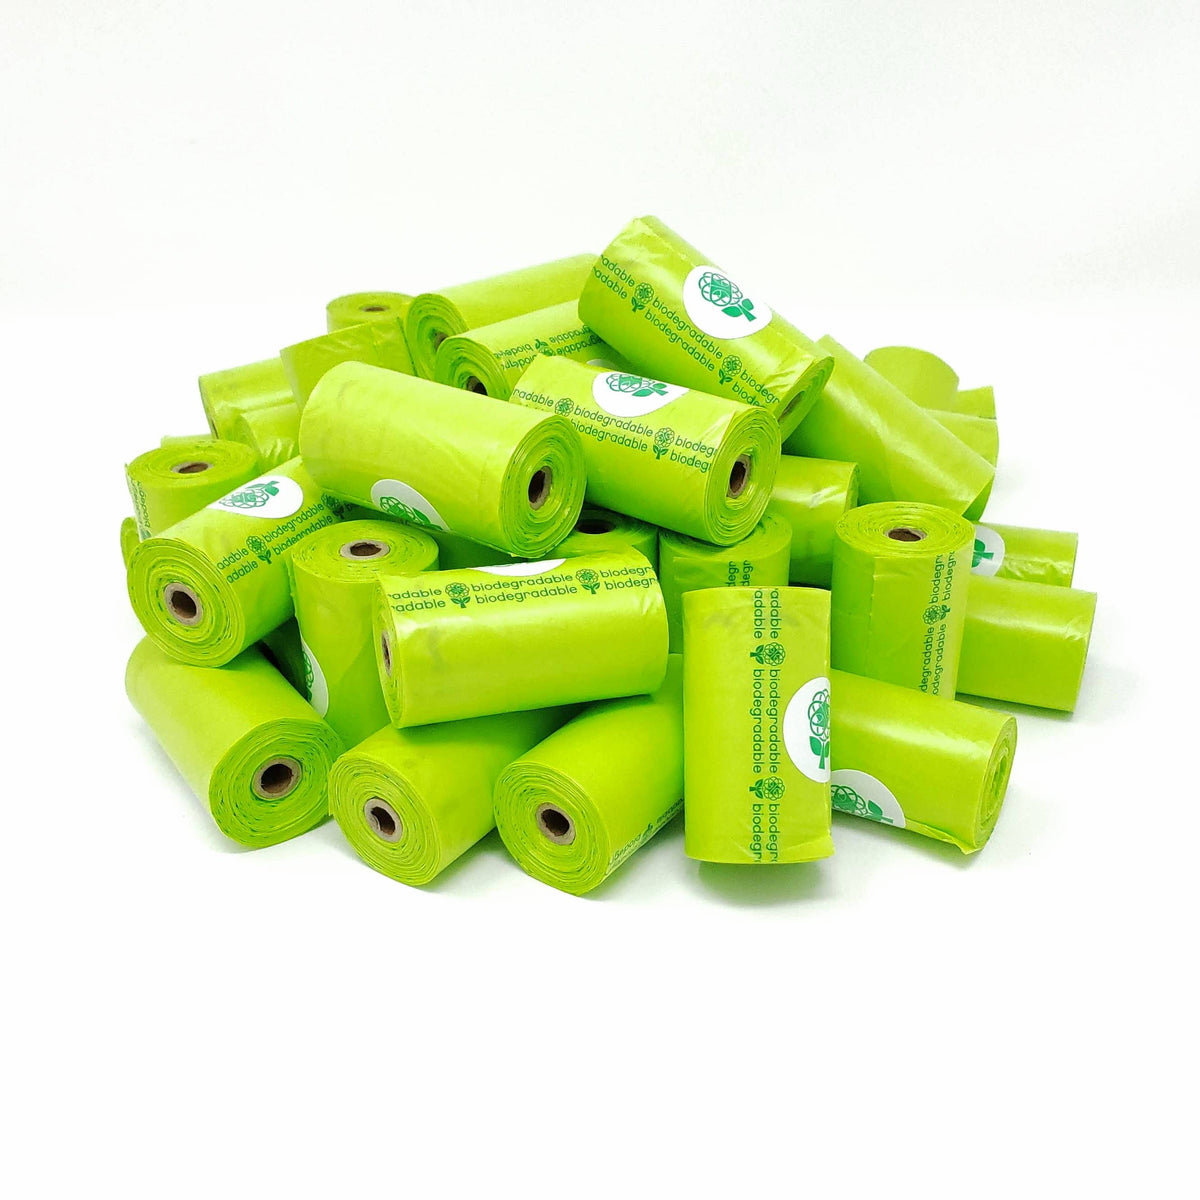 Greenline Biodegradable Poop Bags - 8 Roll Pack